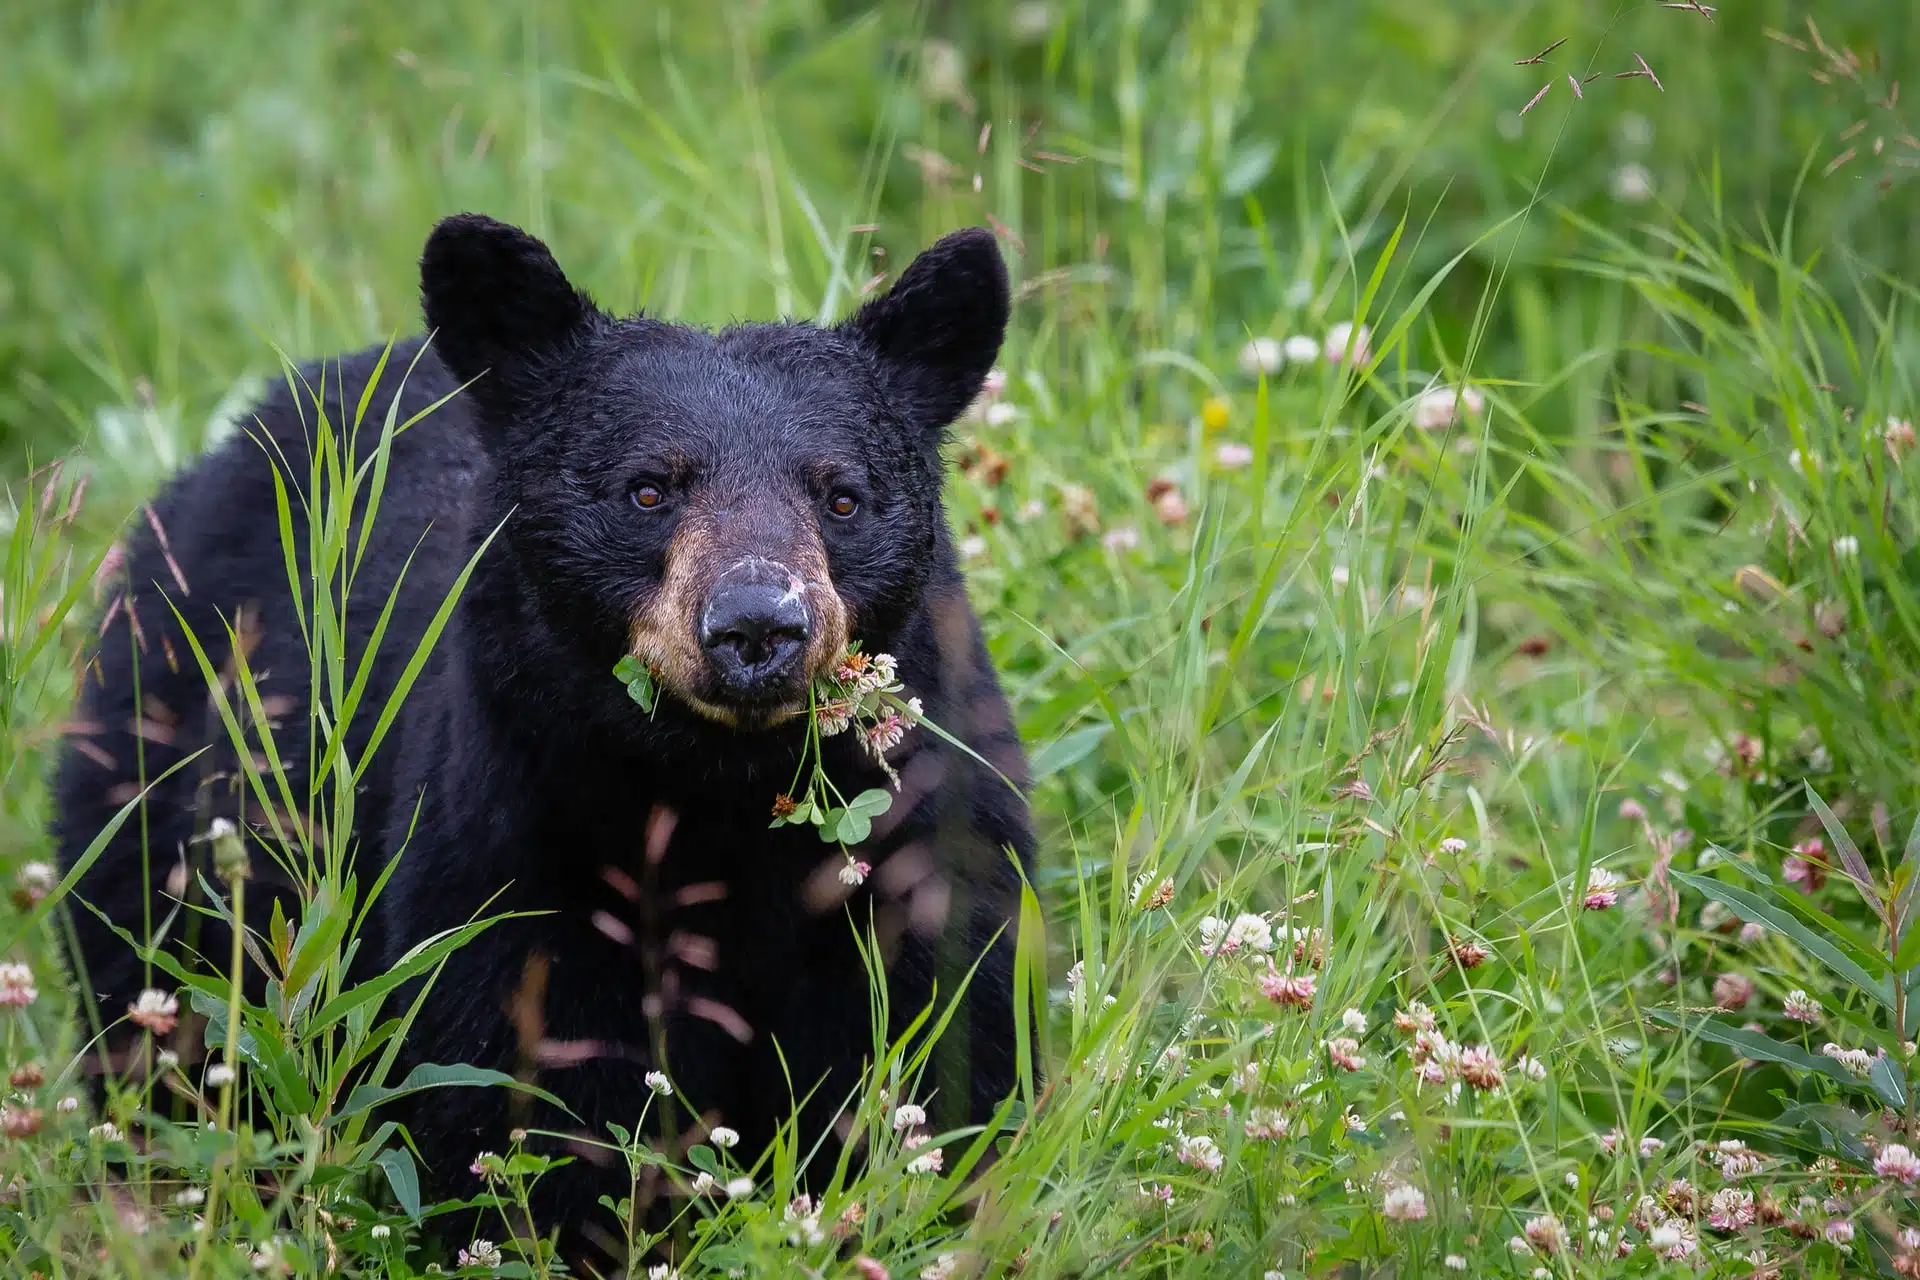 Black bear chewing grass.